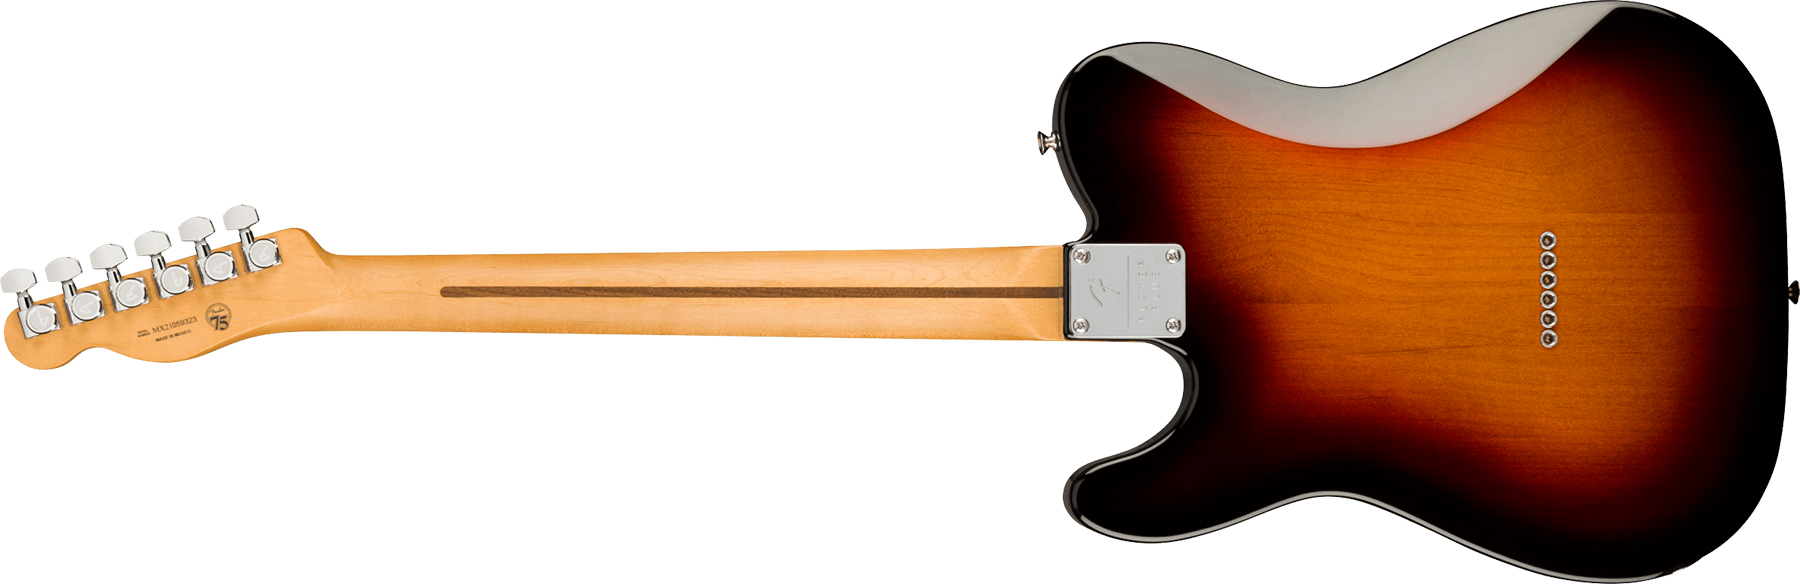 Fender Tele Player Plus Mex 2s Ht Mn - 3-color Sunburst - Televorm elektrische gitaar - Variation 1